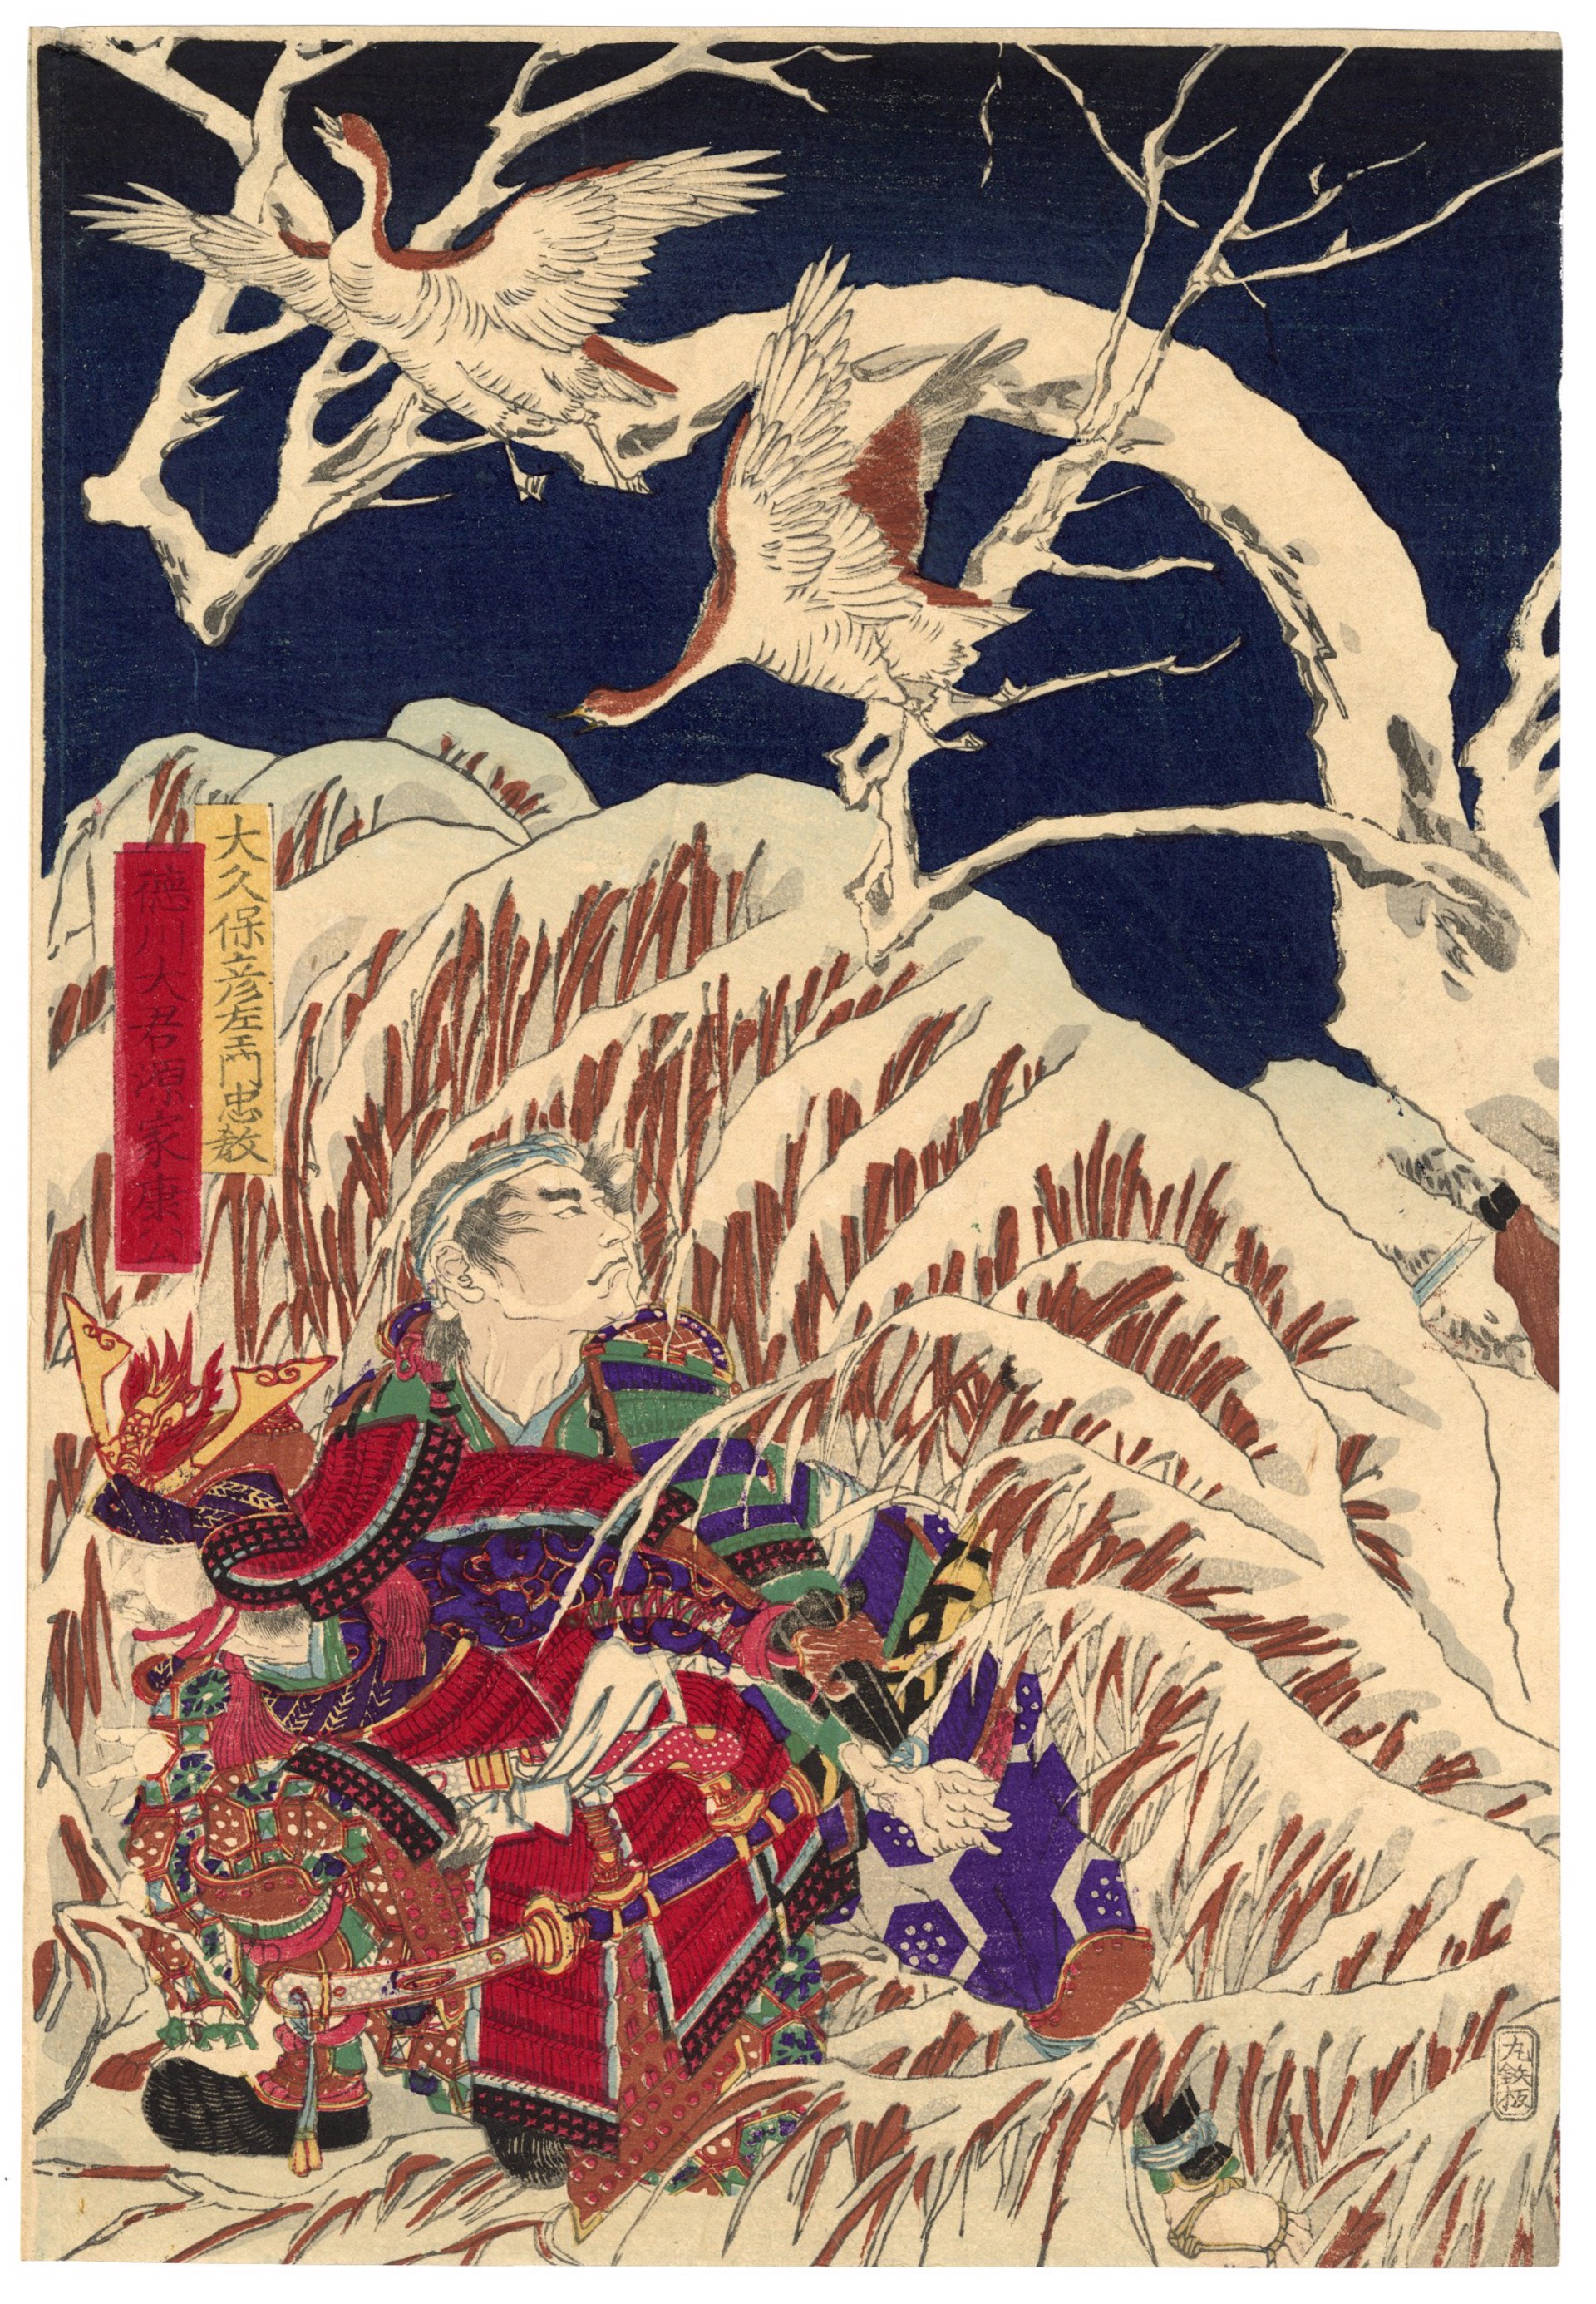 Sanada Yukimura Hunting for Tokugawa Ieyasu in the Snow by Yoshitoshi